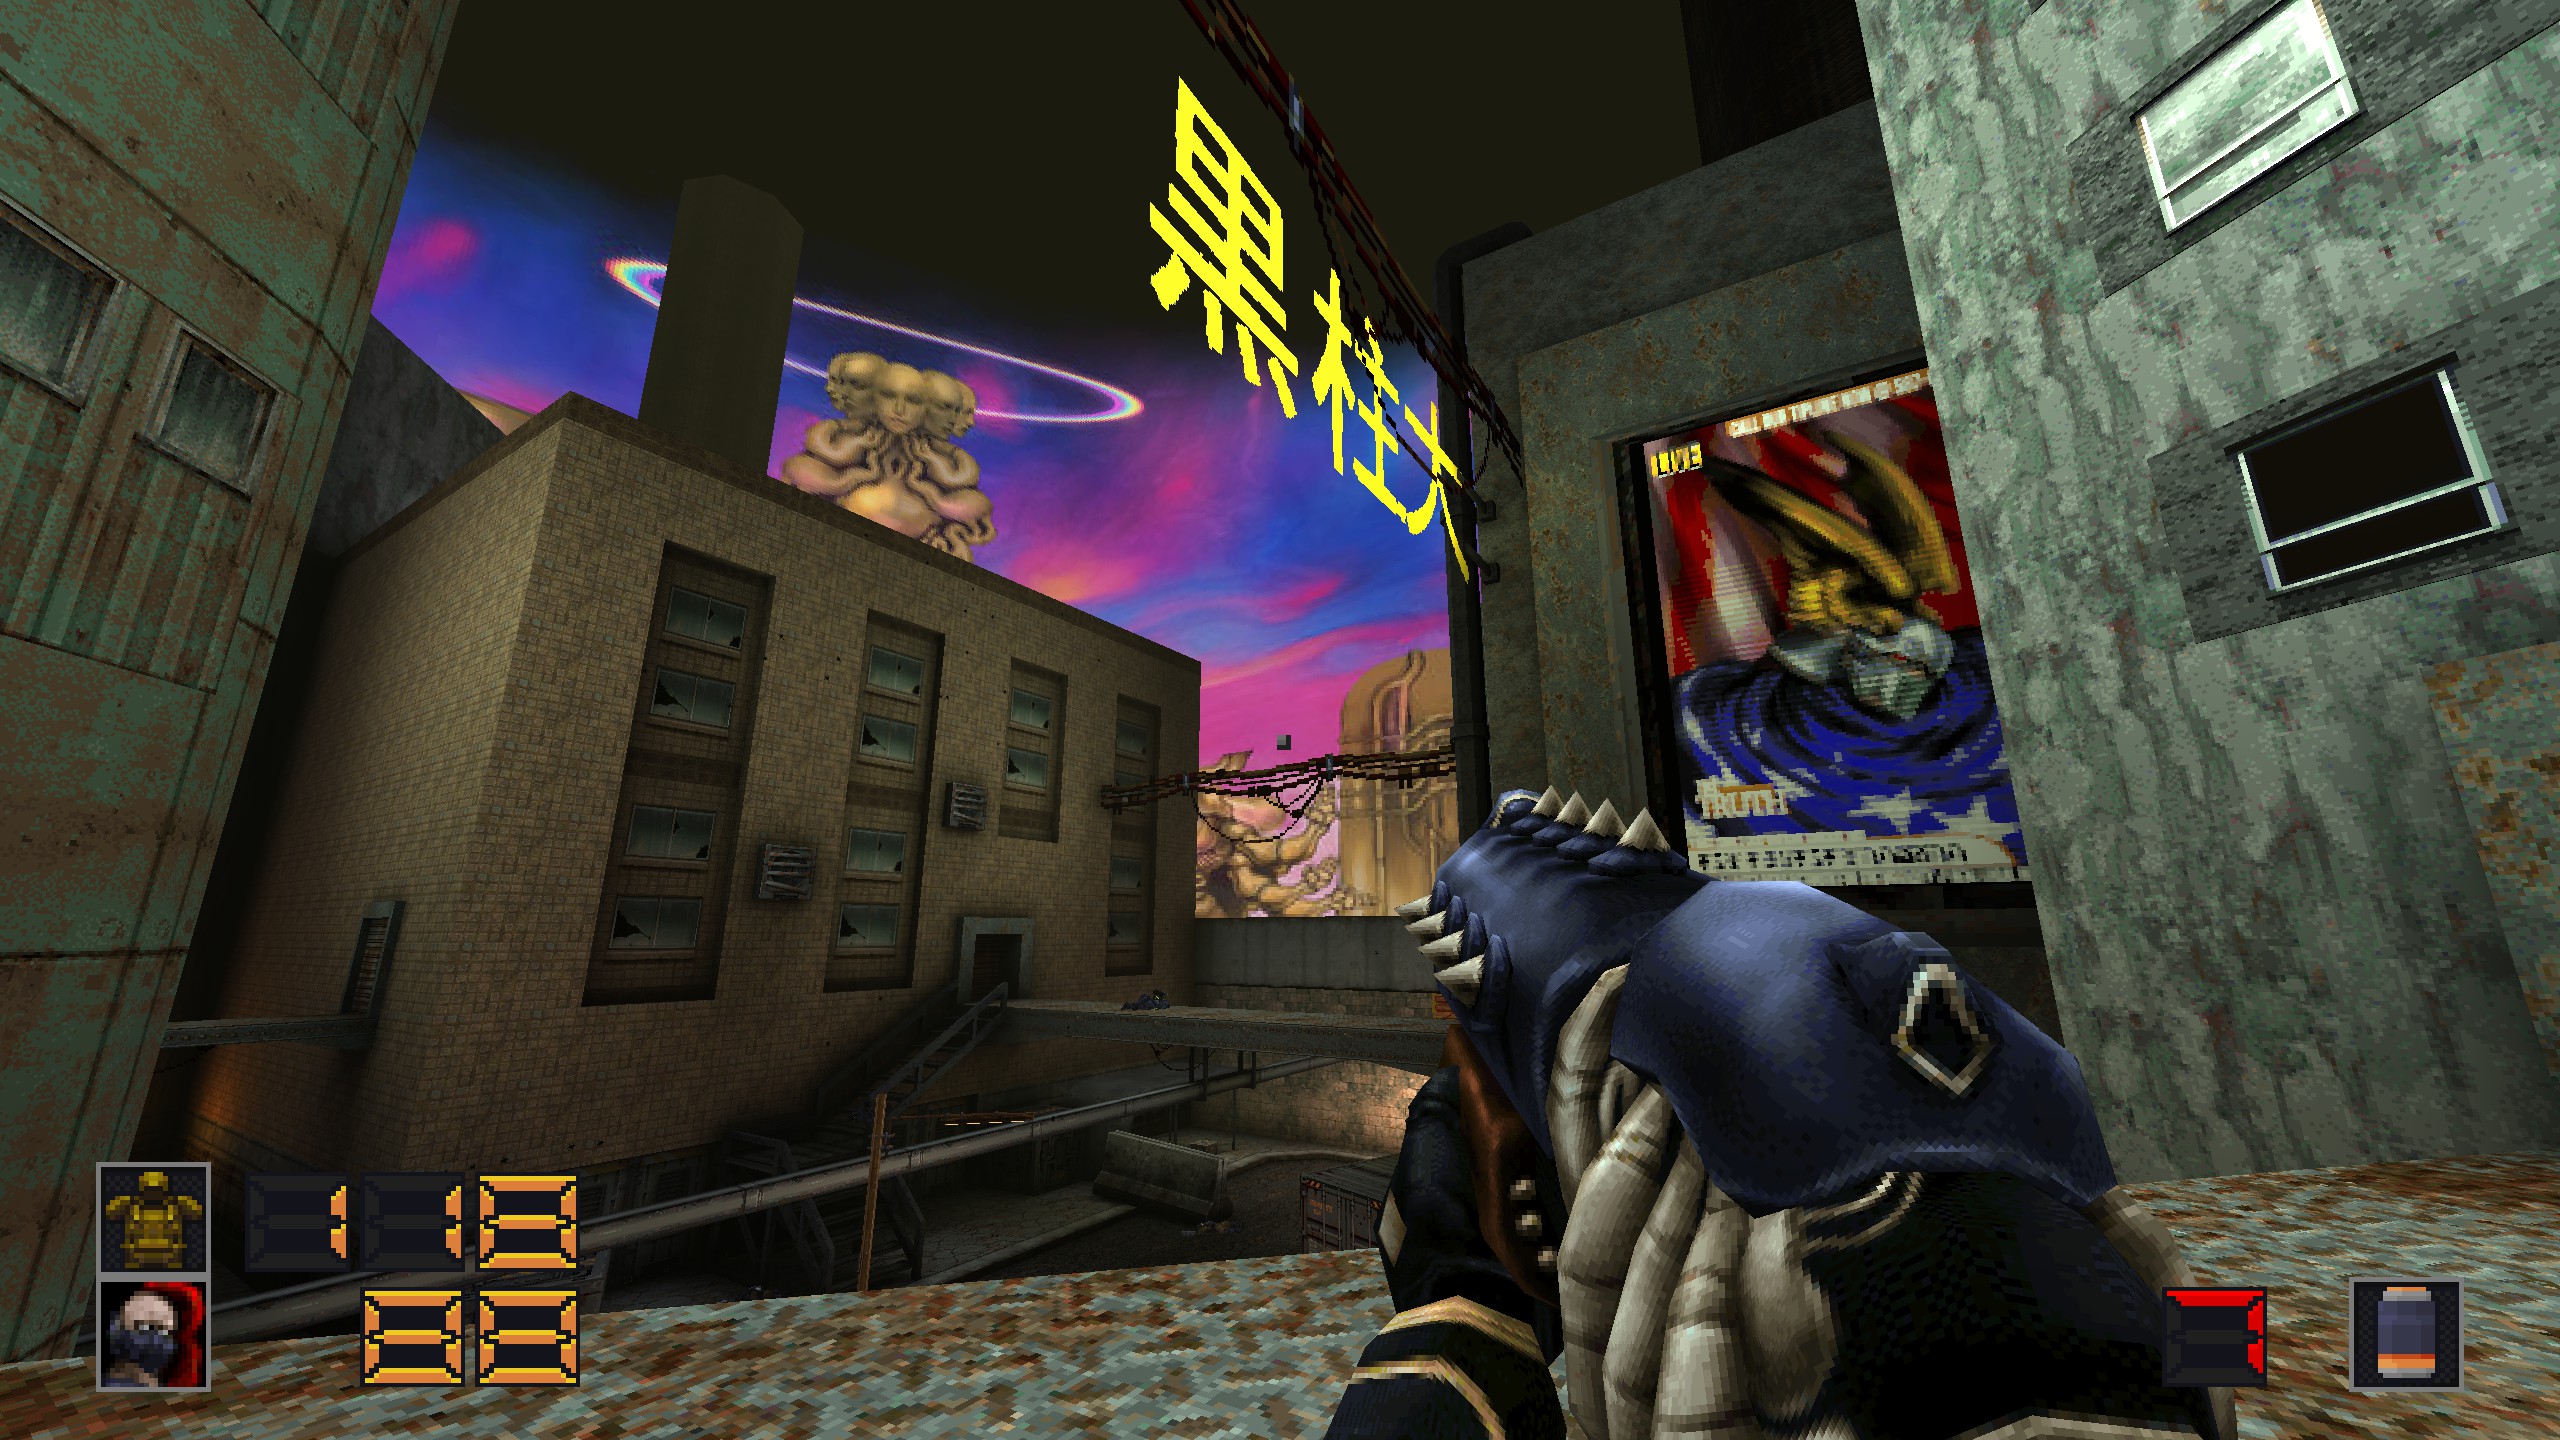 Slave Zero X Quake mod gameplay showing surreal cyberpunk city